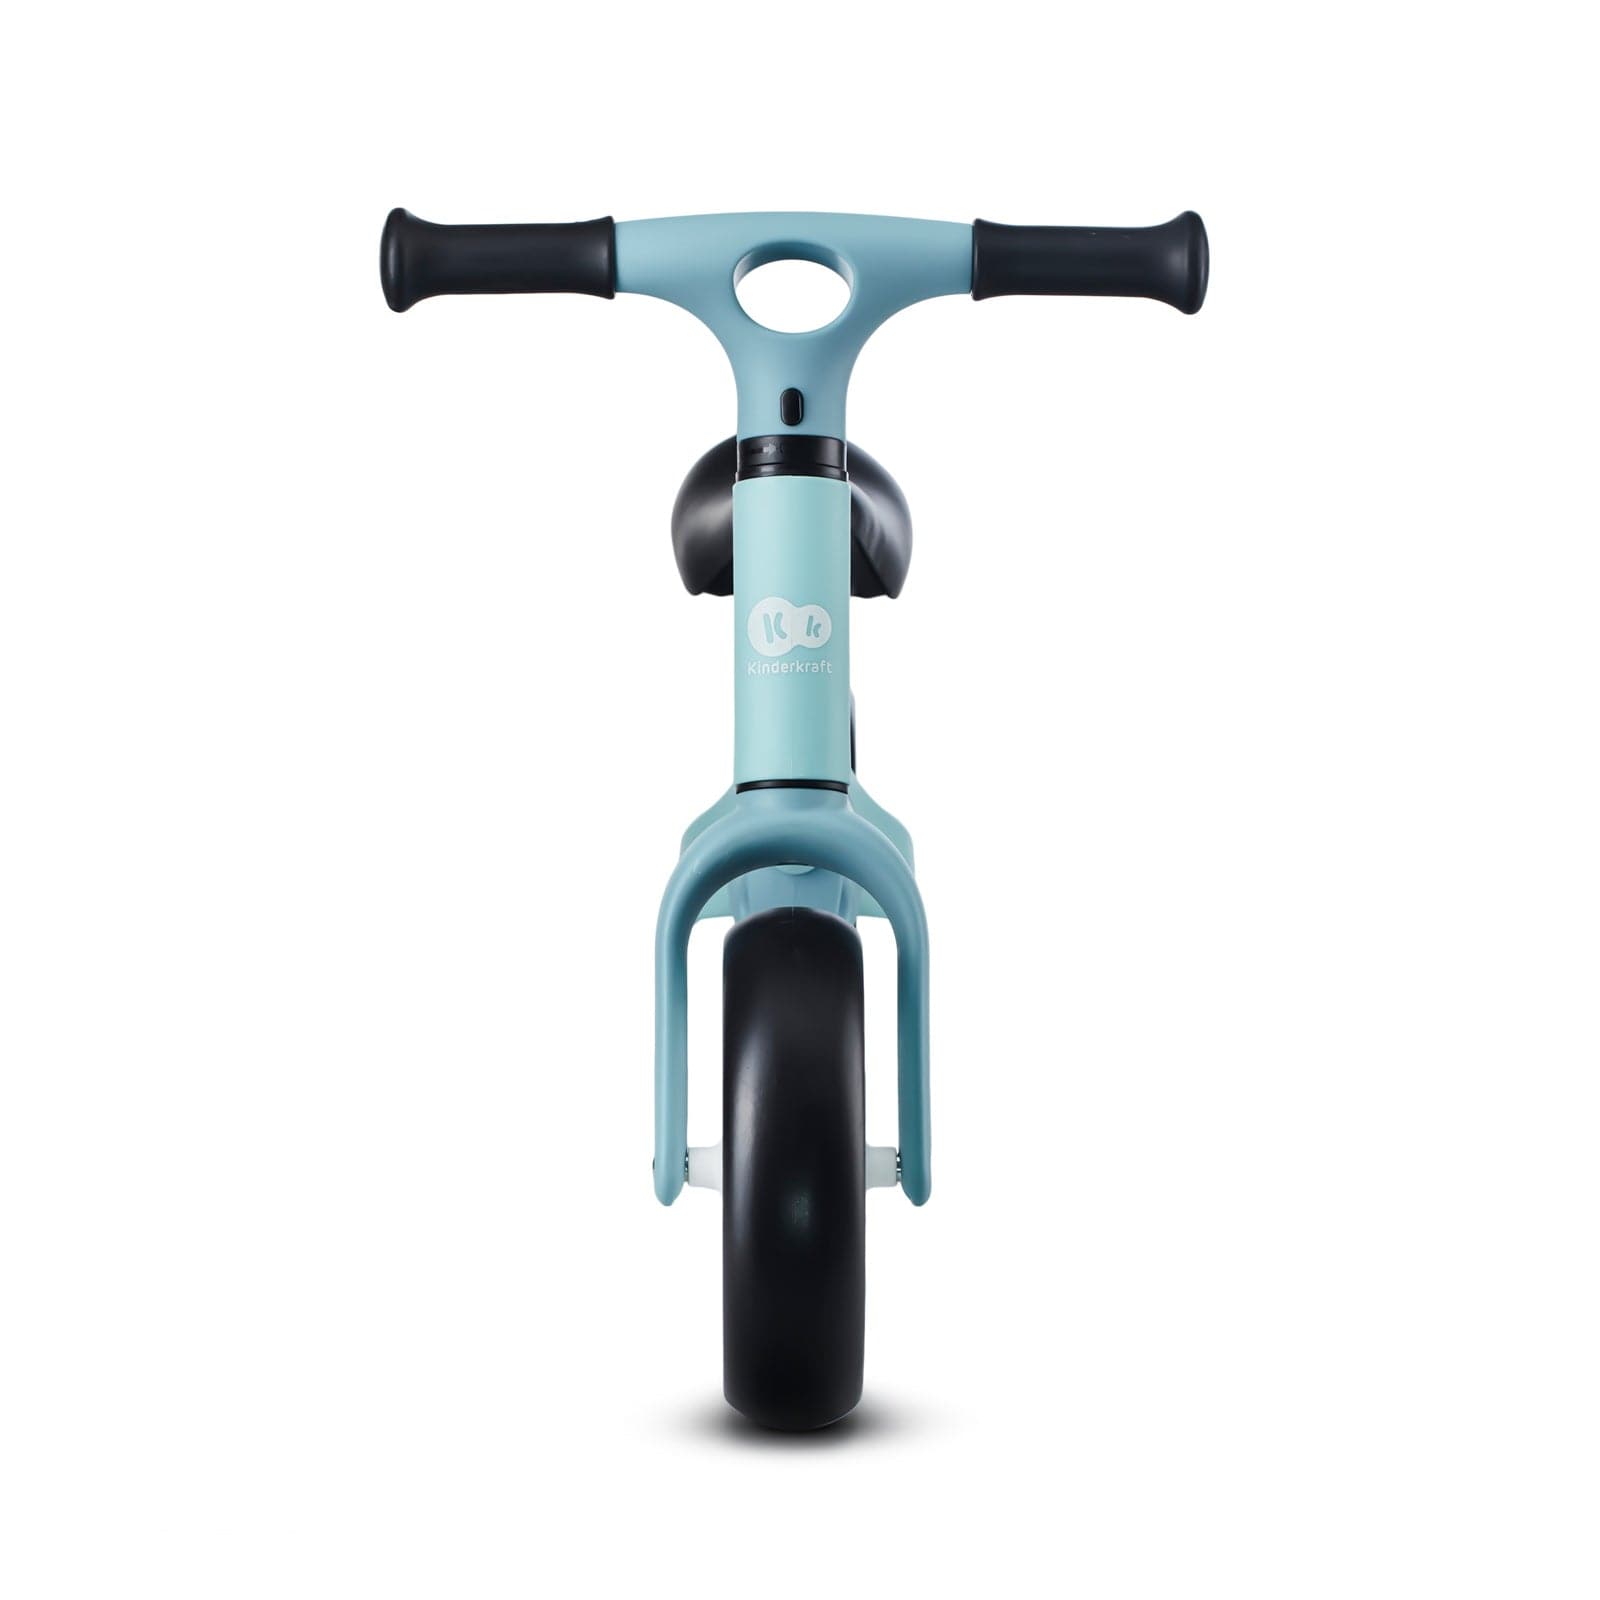 Kinderkraft Tove Balance Bike Summer Mint -  | For Your Little One